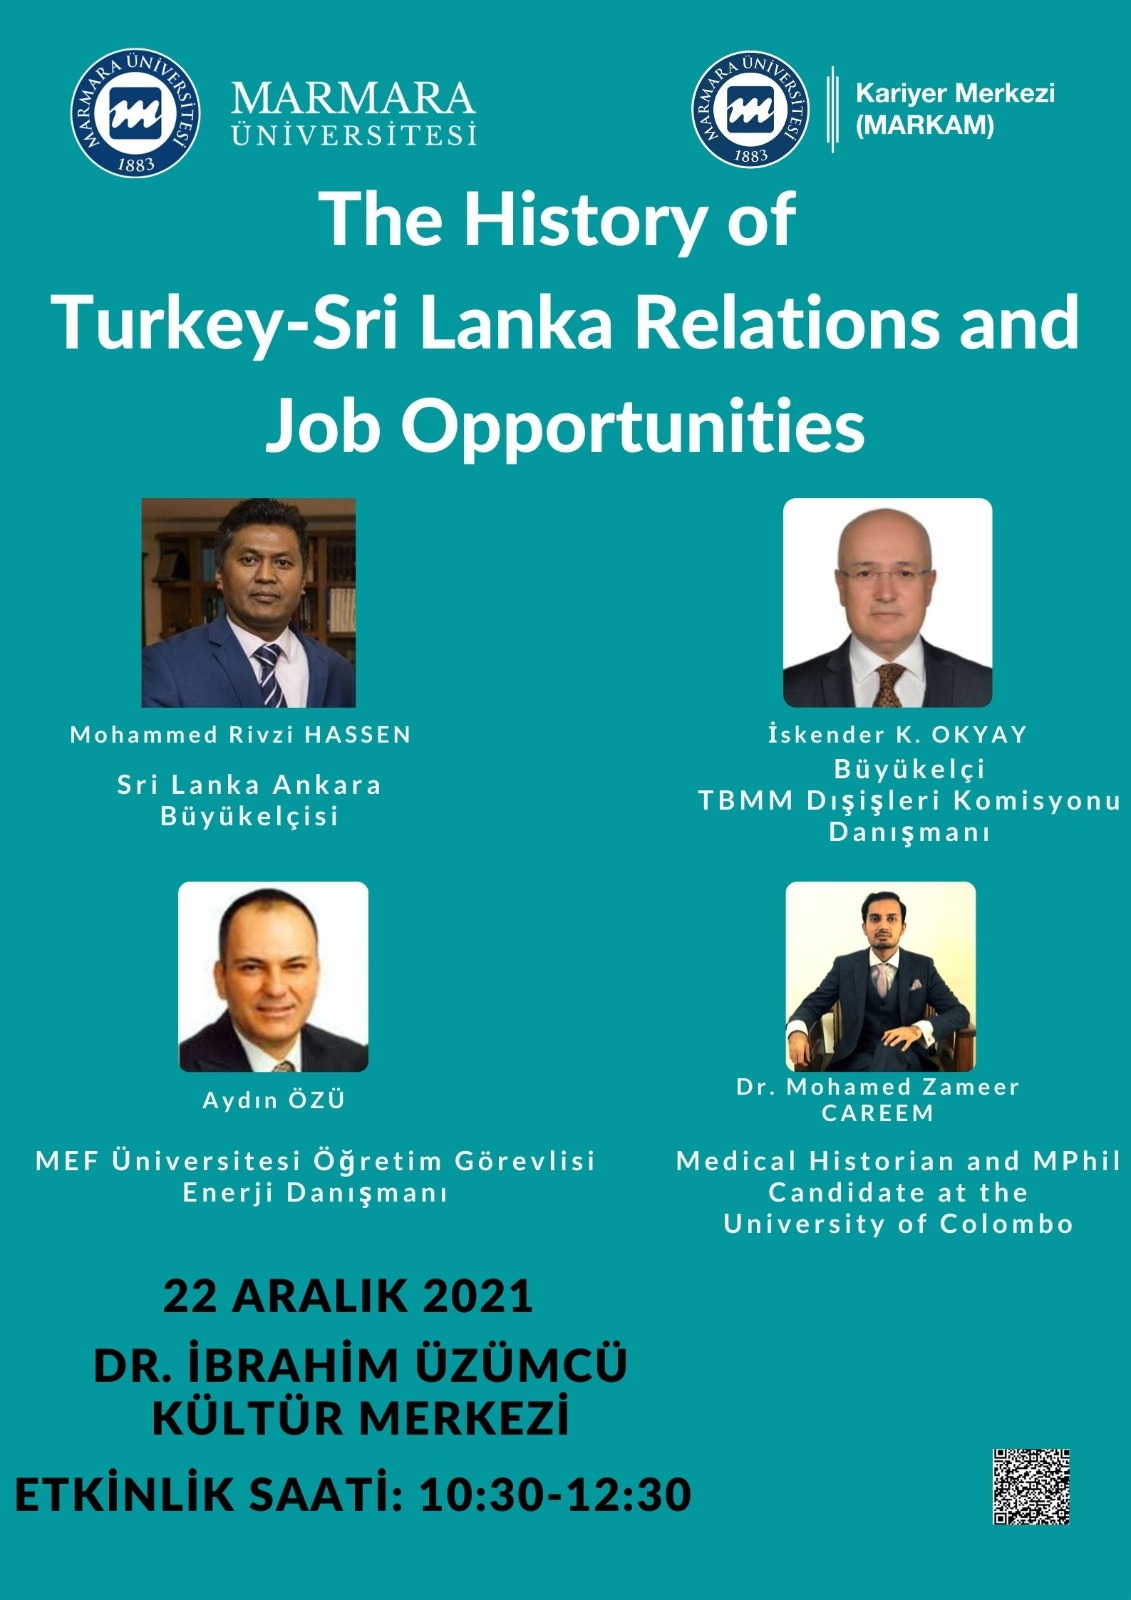 The History of Turkey-Sri Lanka Relations and Job Opportunities  18.12.2021.jpeg (244 KB)